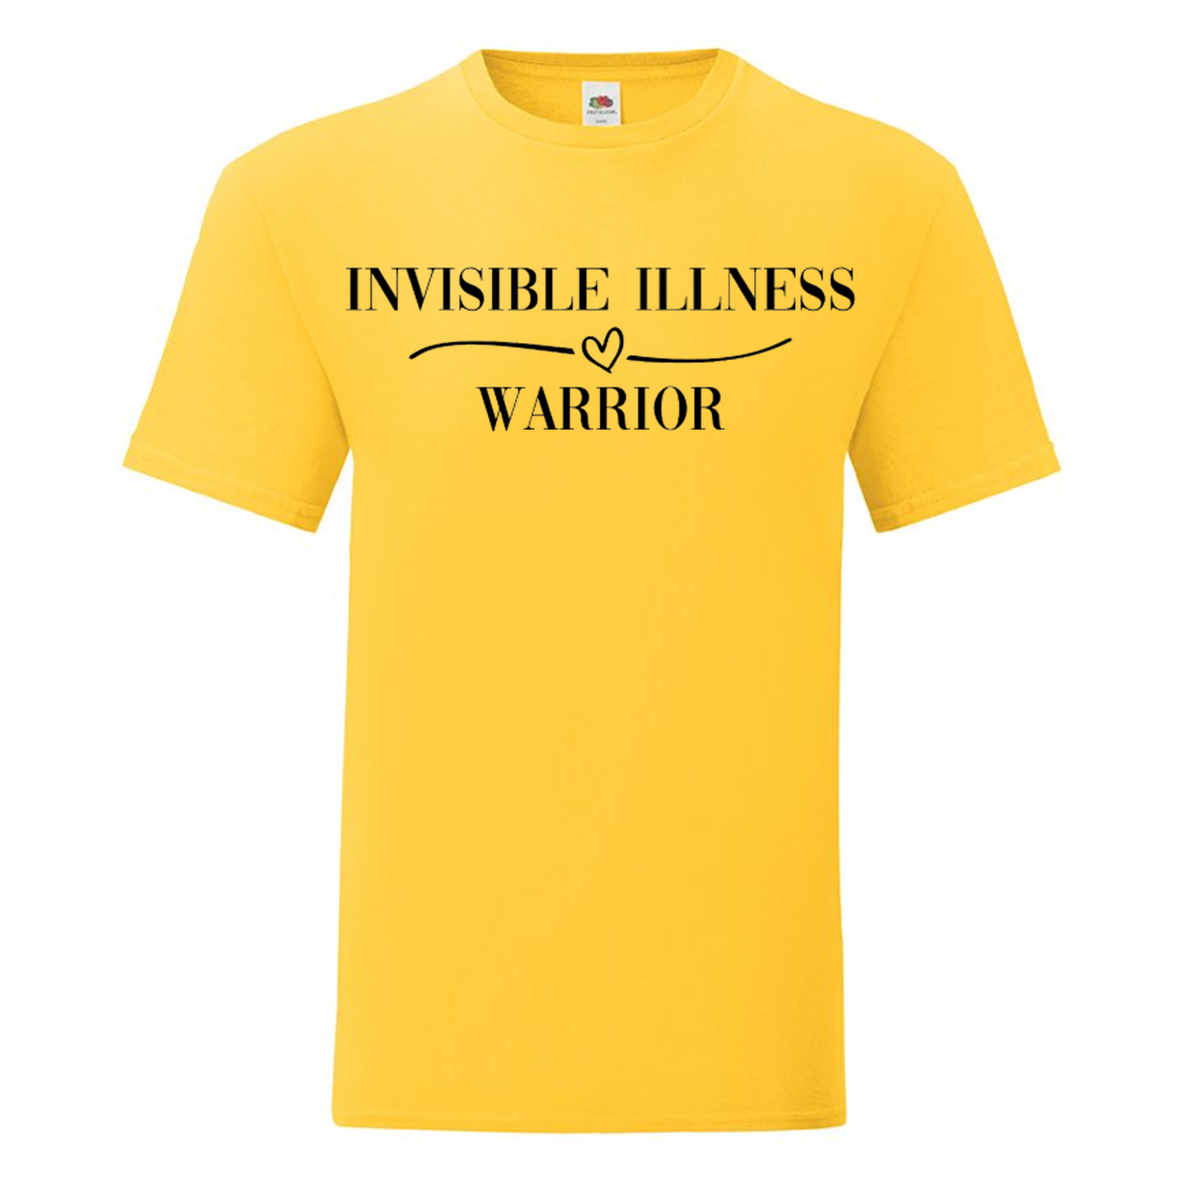 Invisible Illness Warrior Kids T Shirt